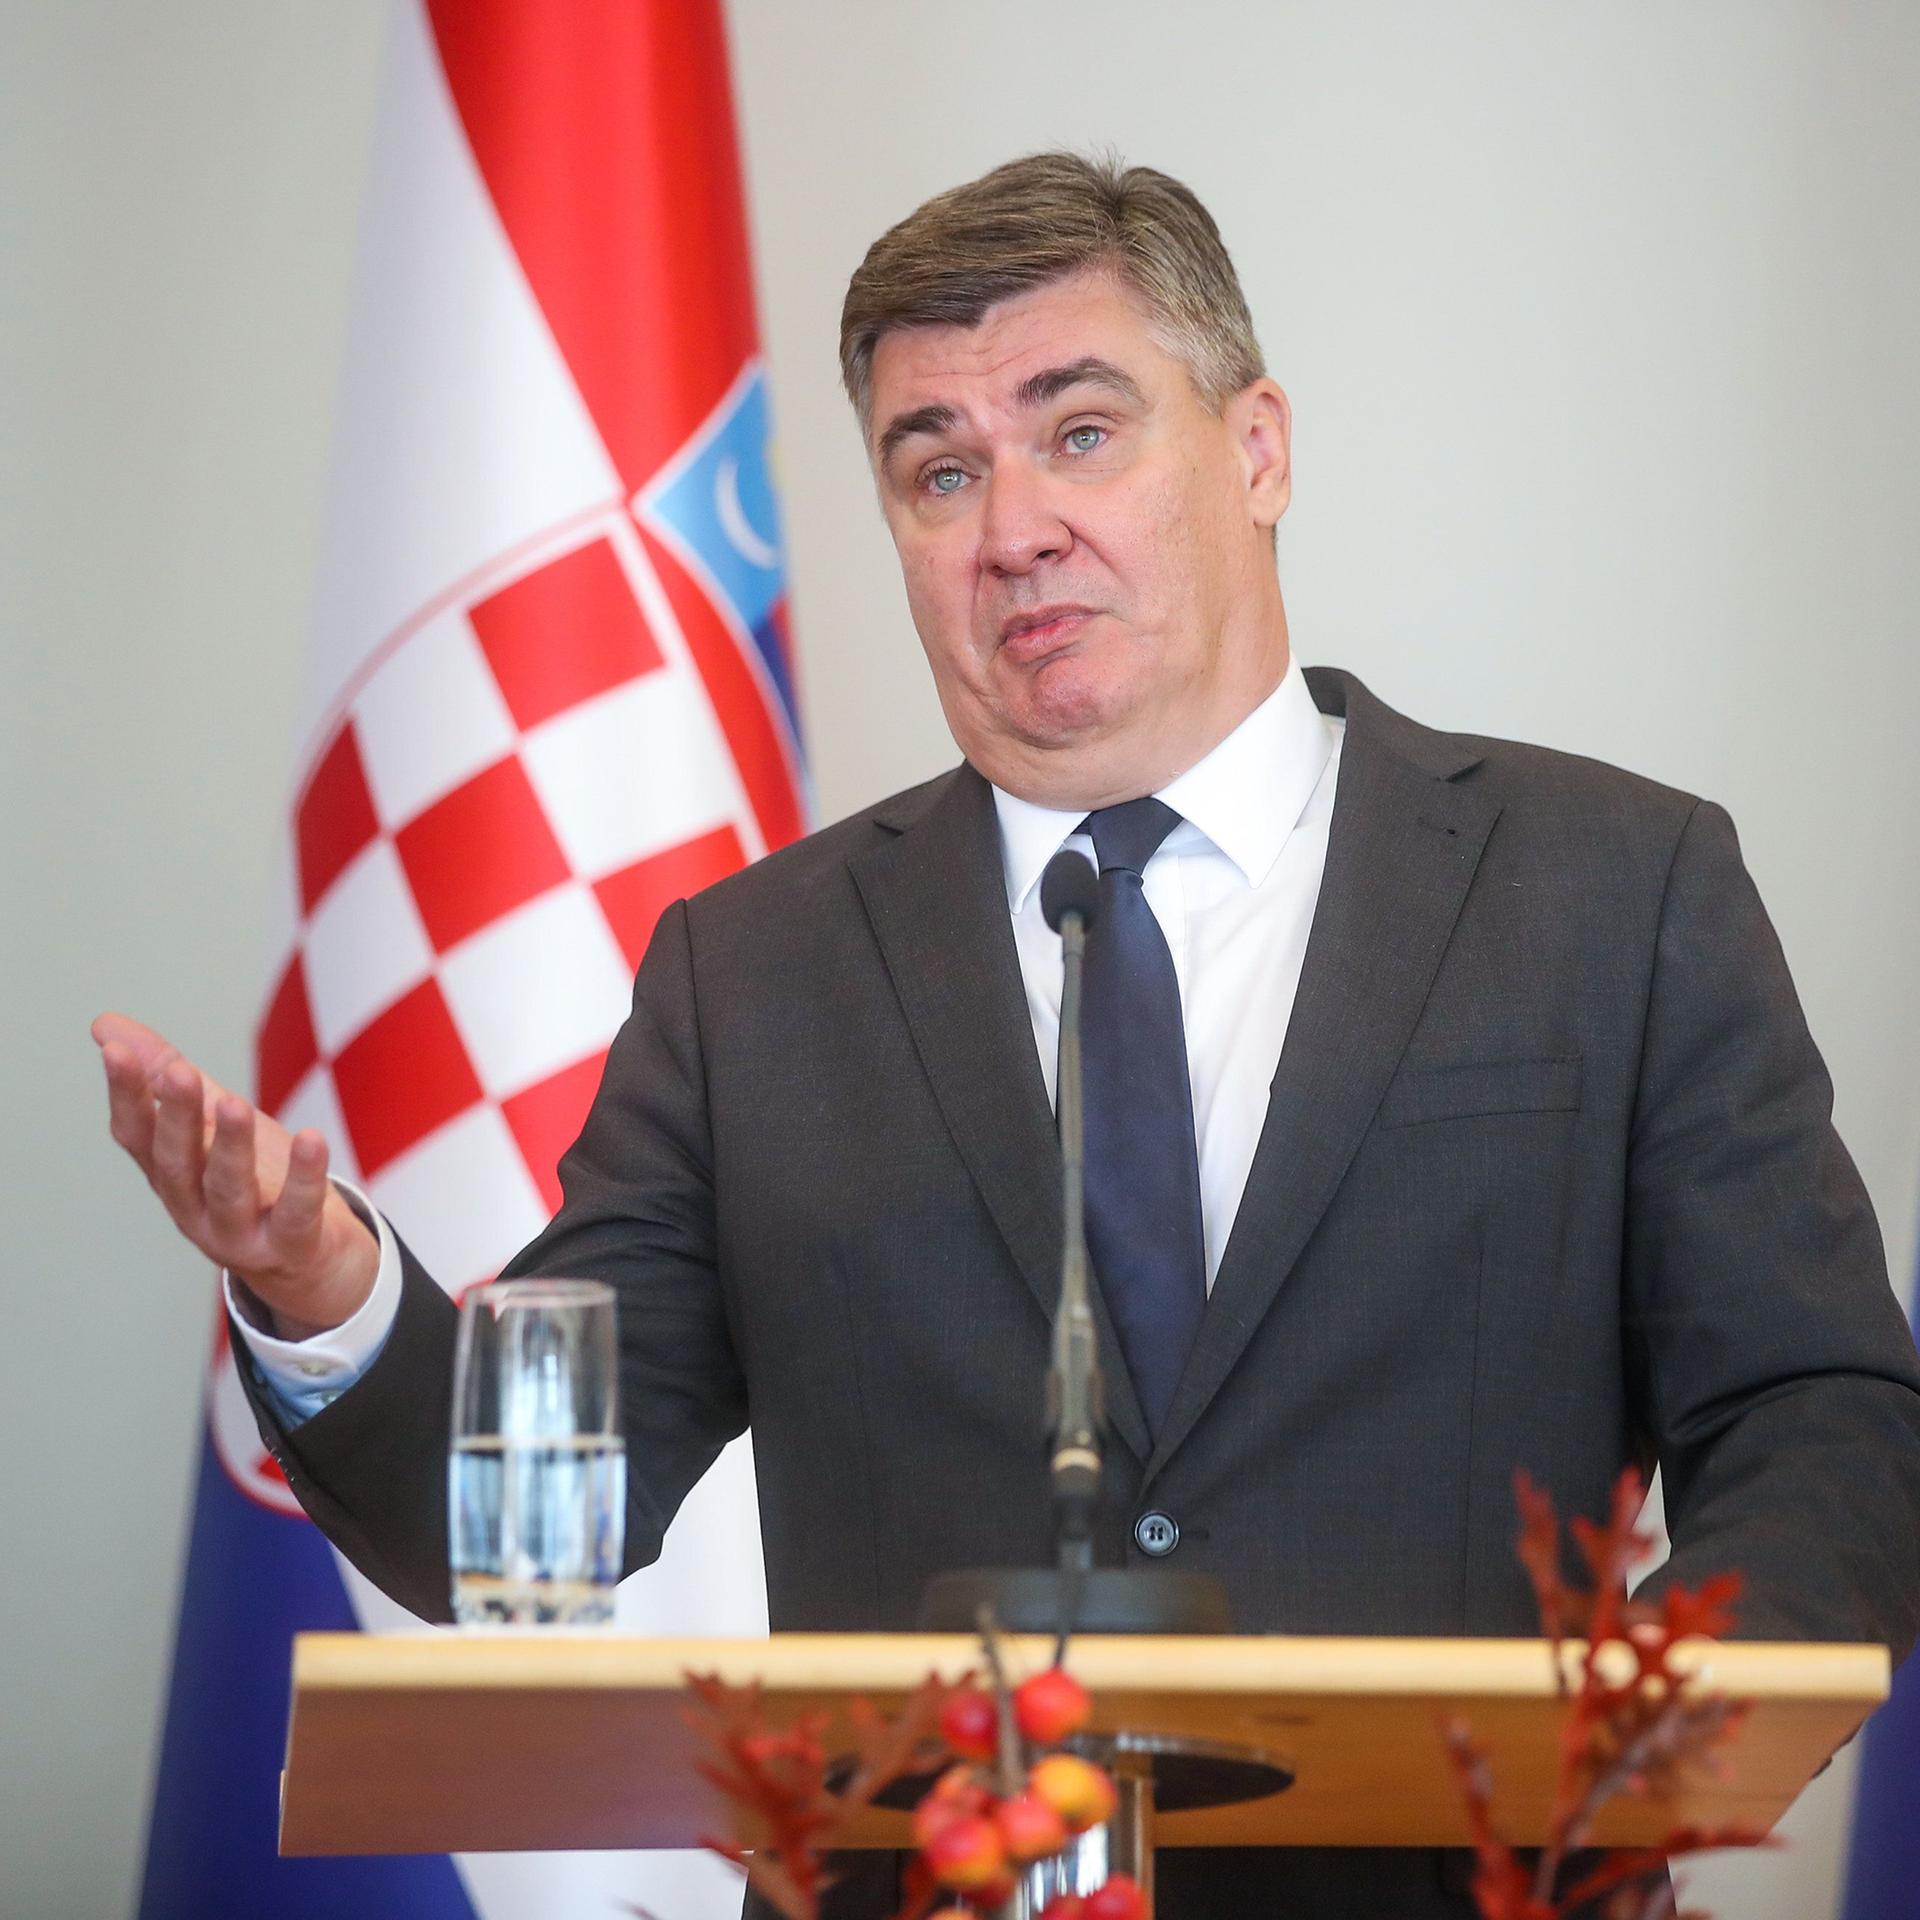 Der kroatische Staatspräsident Zoran Milanovic